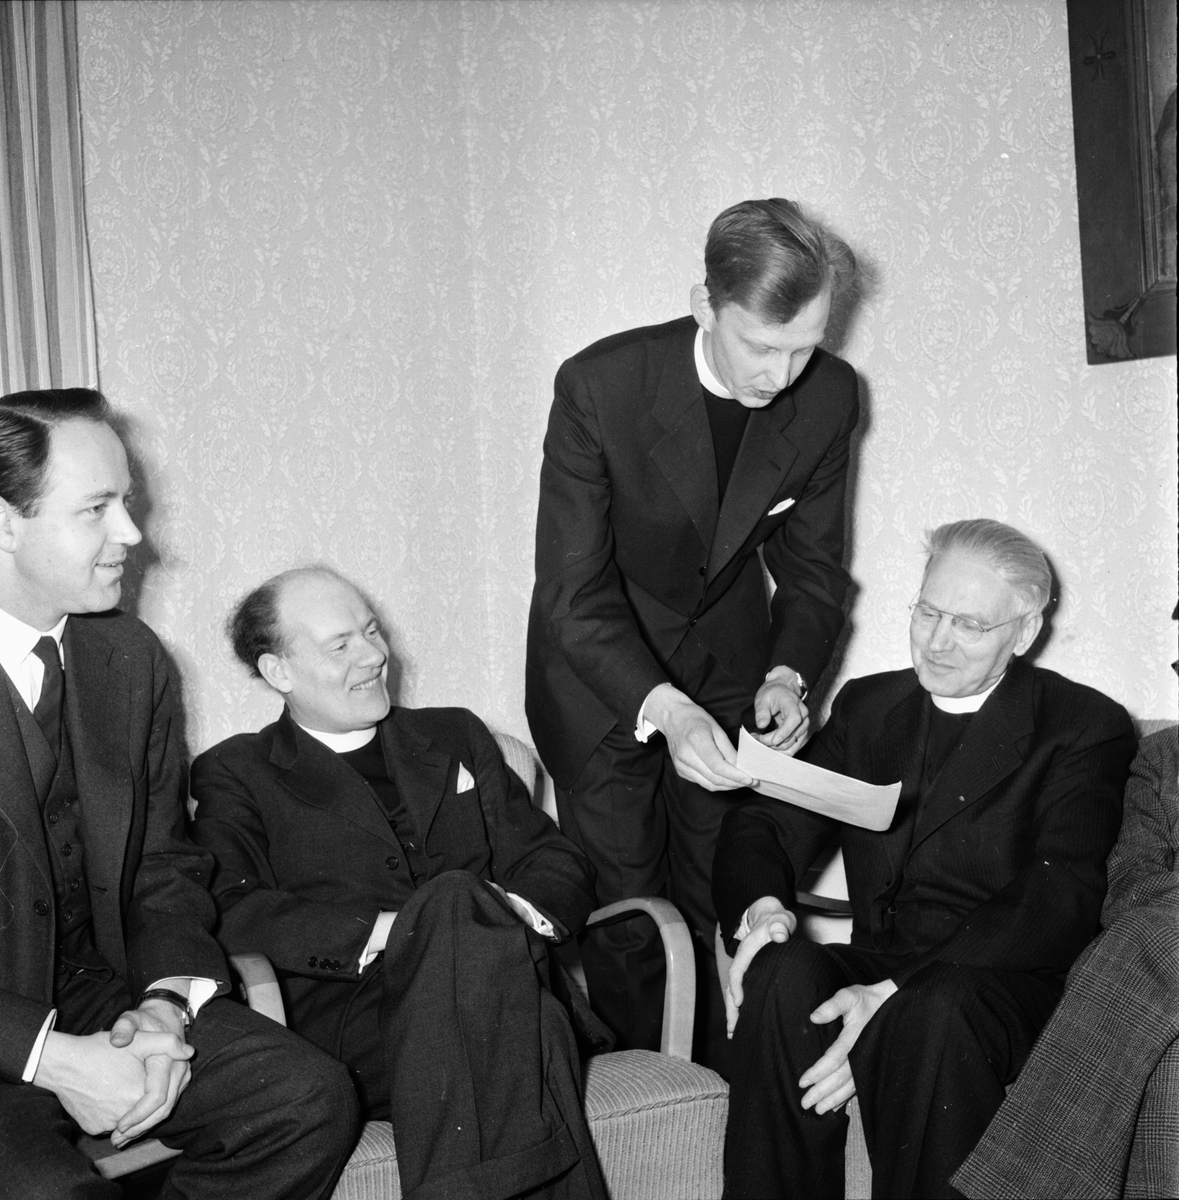 Småkyrko-konferens
Undersvik April 1956